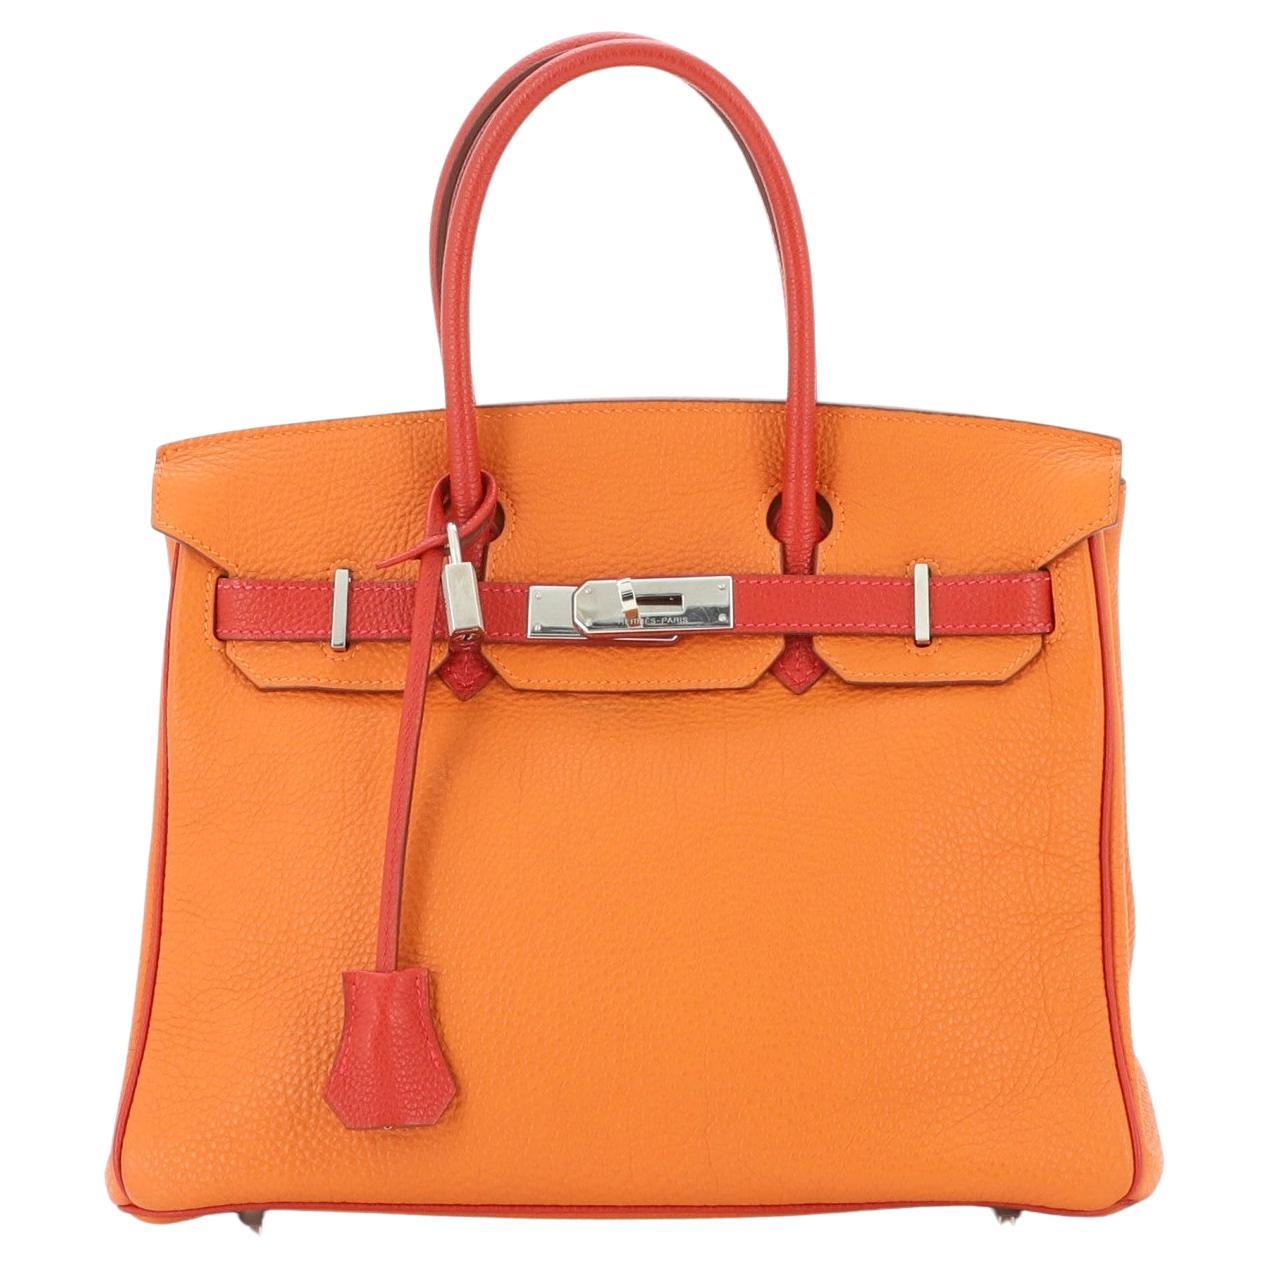 Hermes Birkin Handbag Bicolor Togo with Palladium Hardware 30